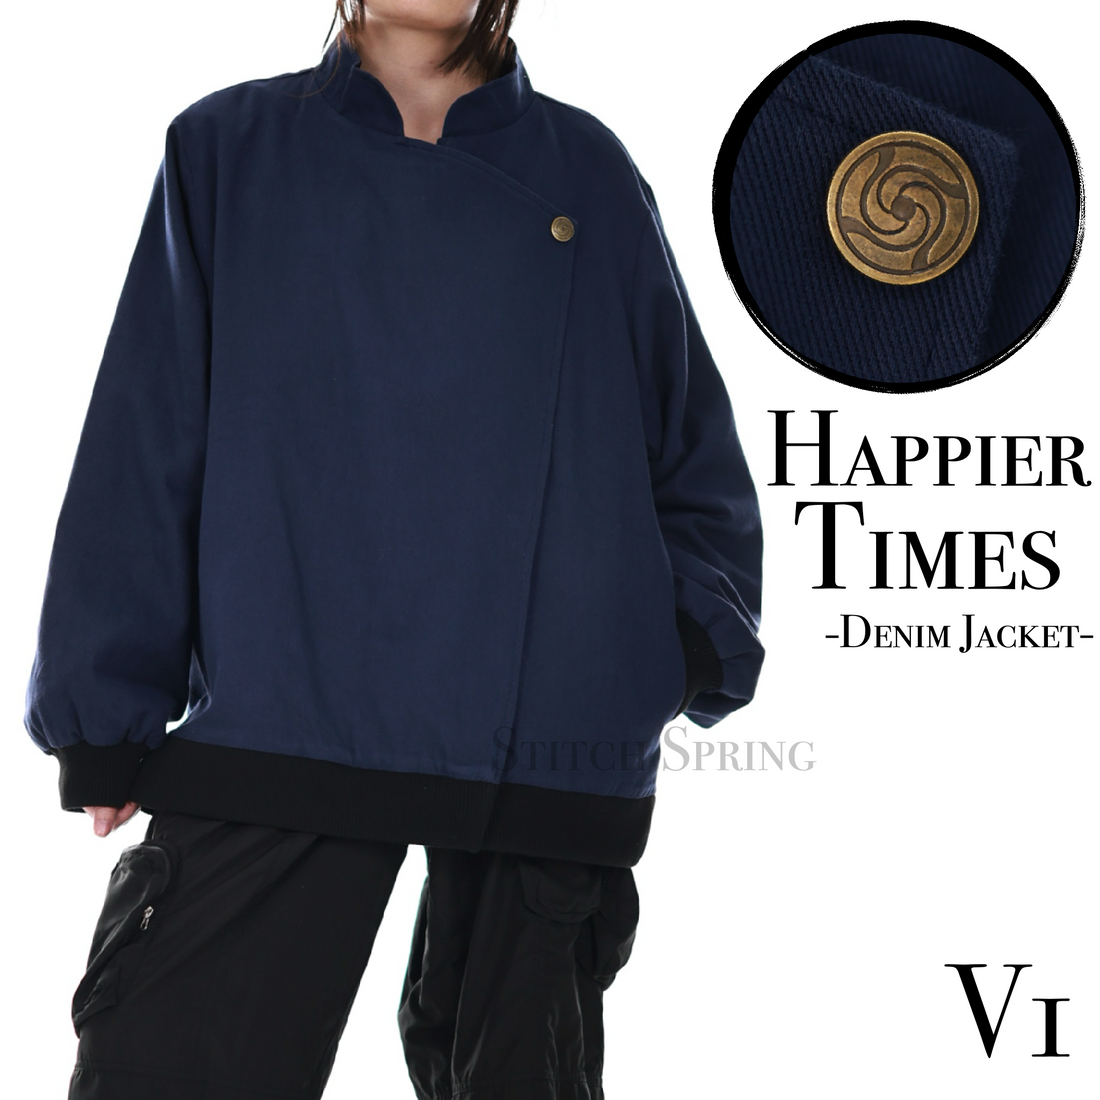 Happier Times Denim Jacket Preorder